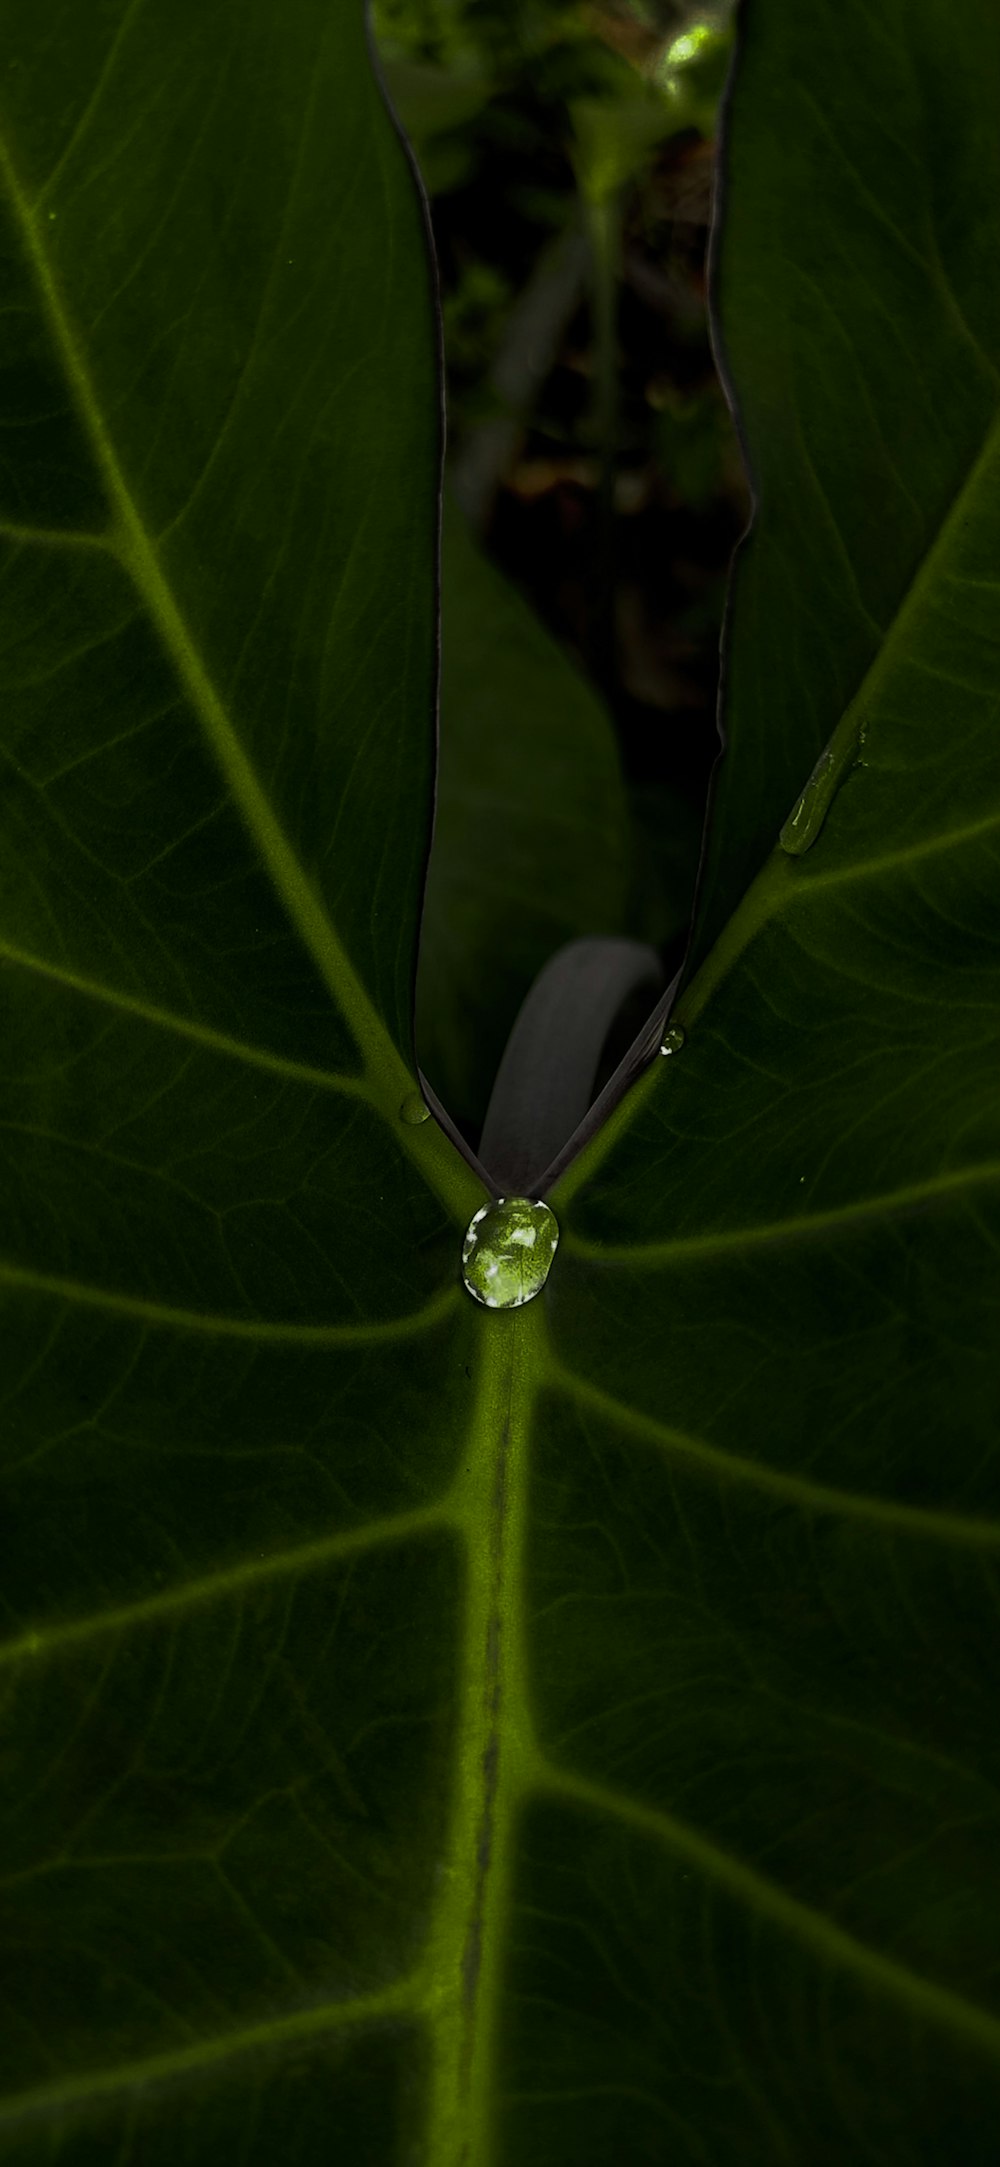 taro leaf with morning dew